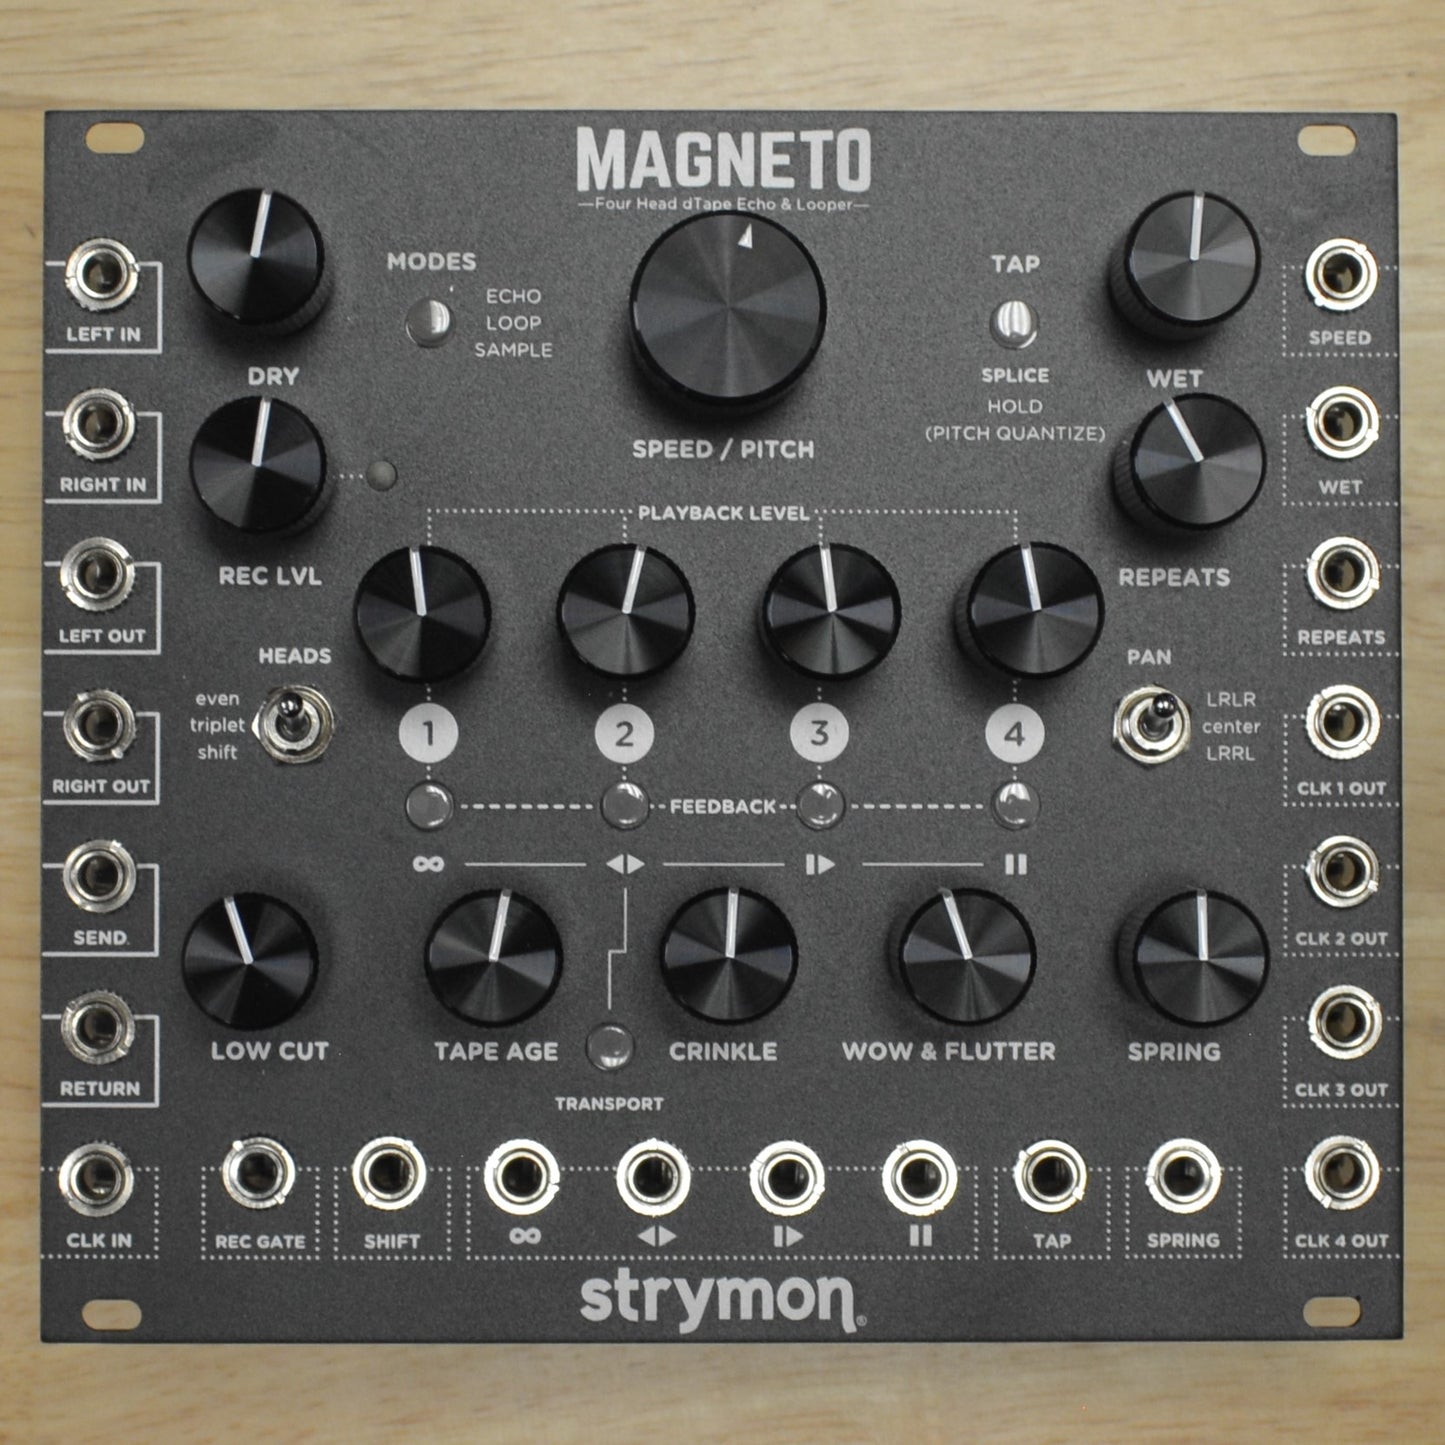 Strymon Magneto Four Head dTape Echo & Looper 2022